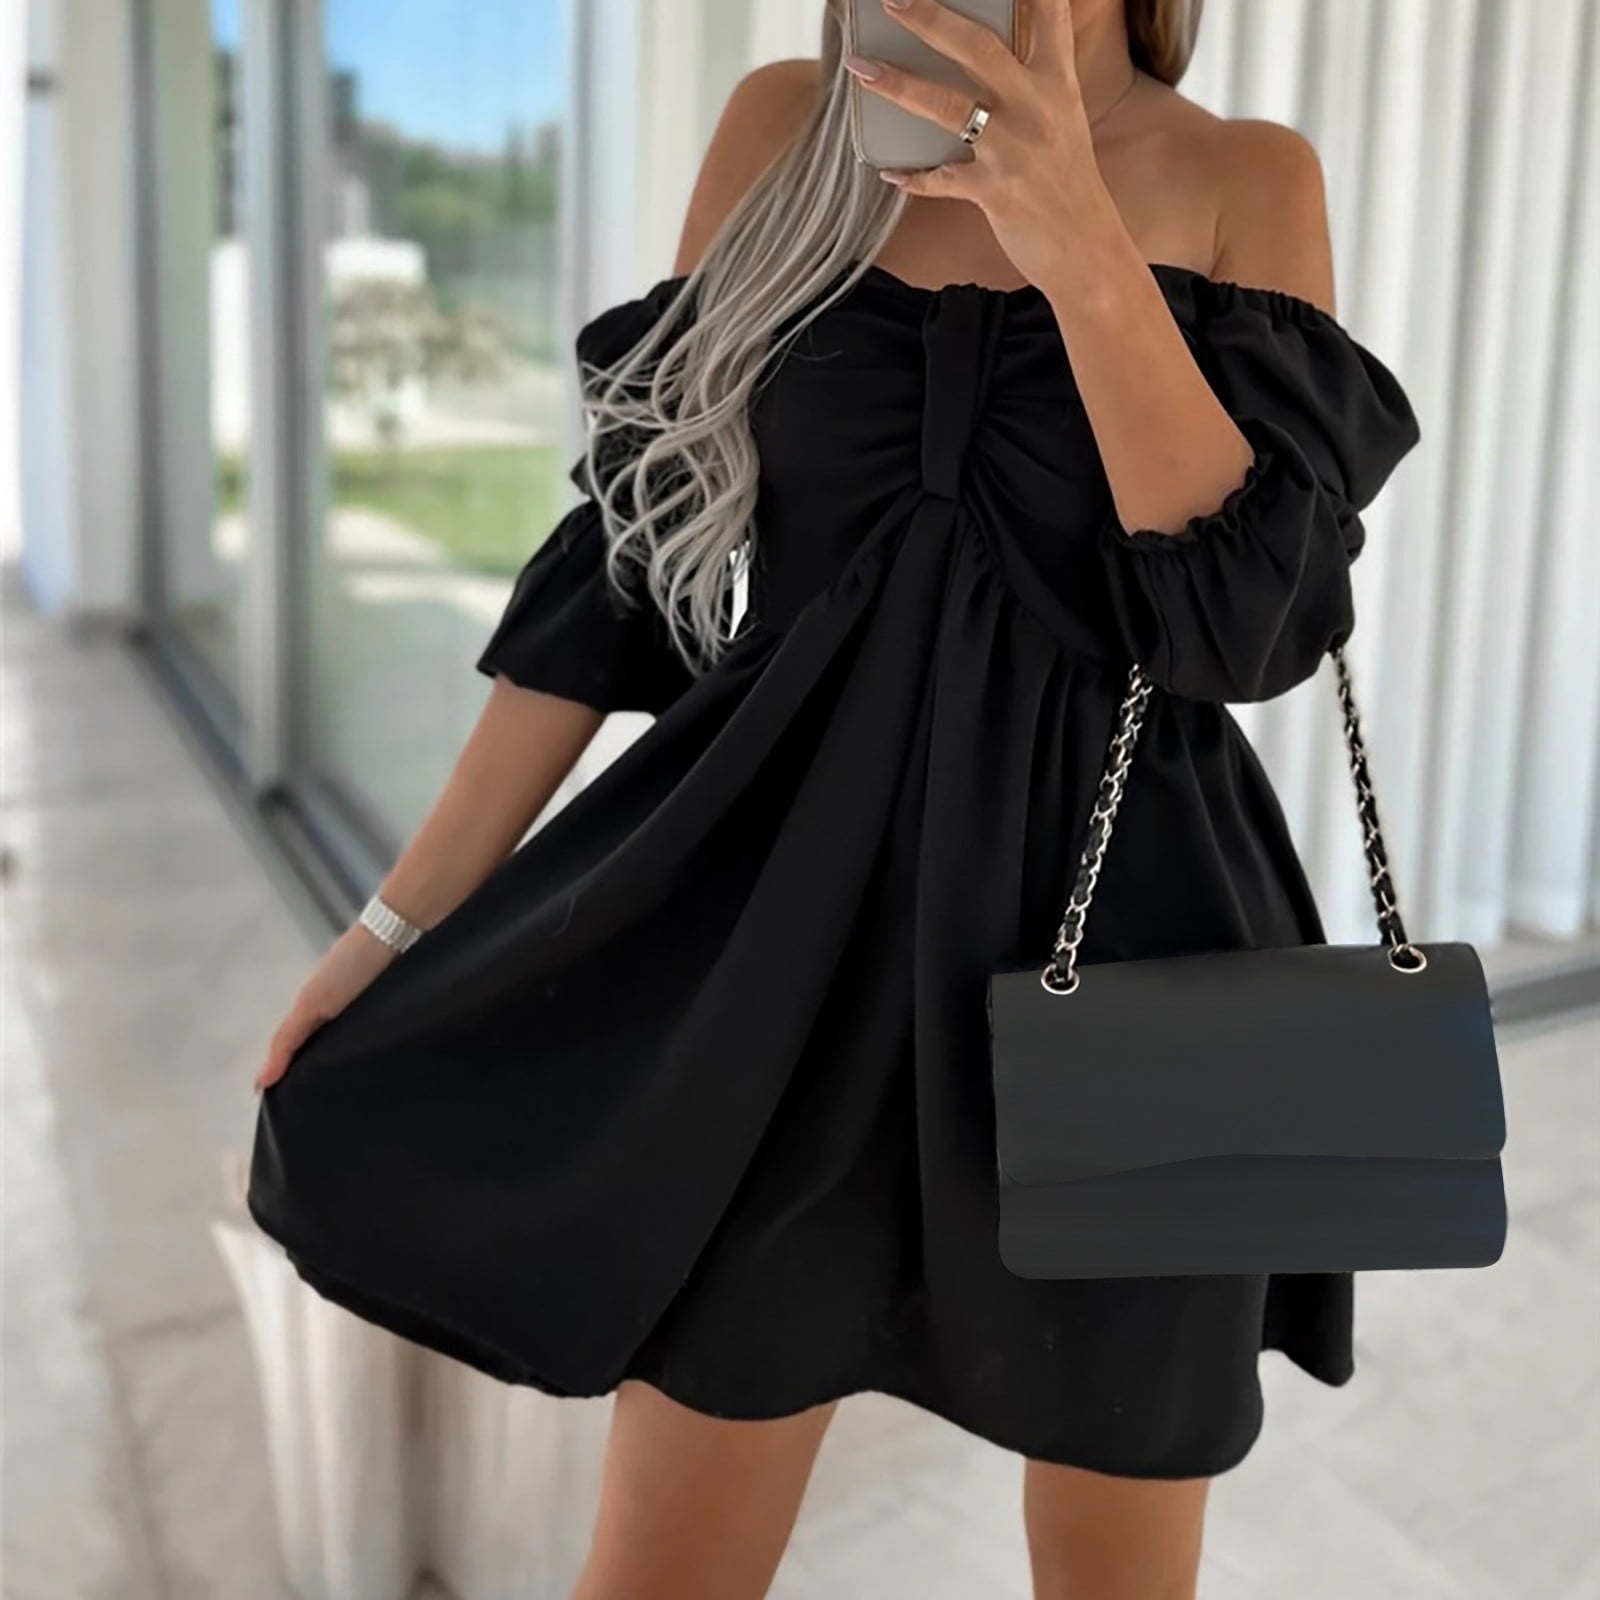 black dresses women